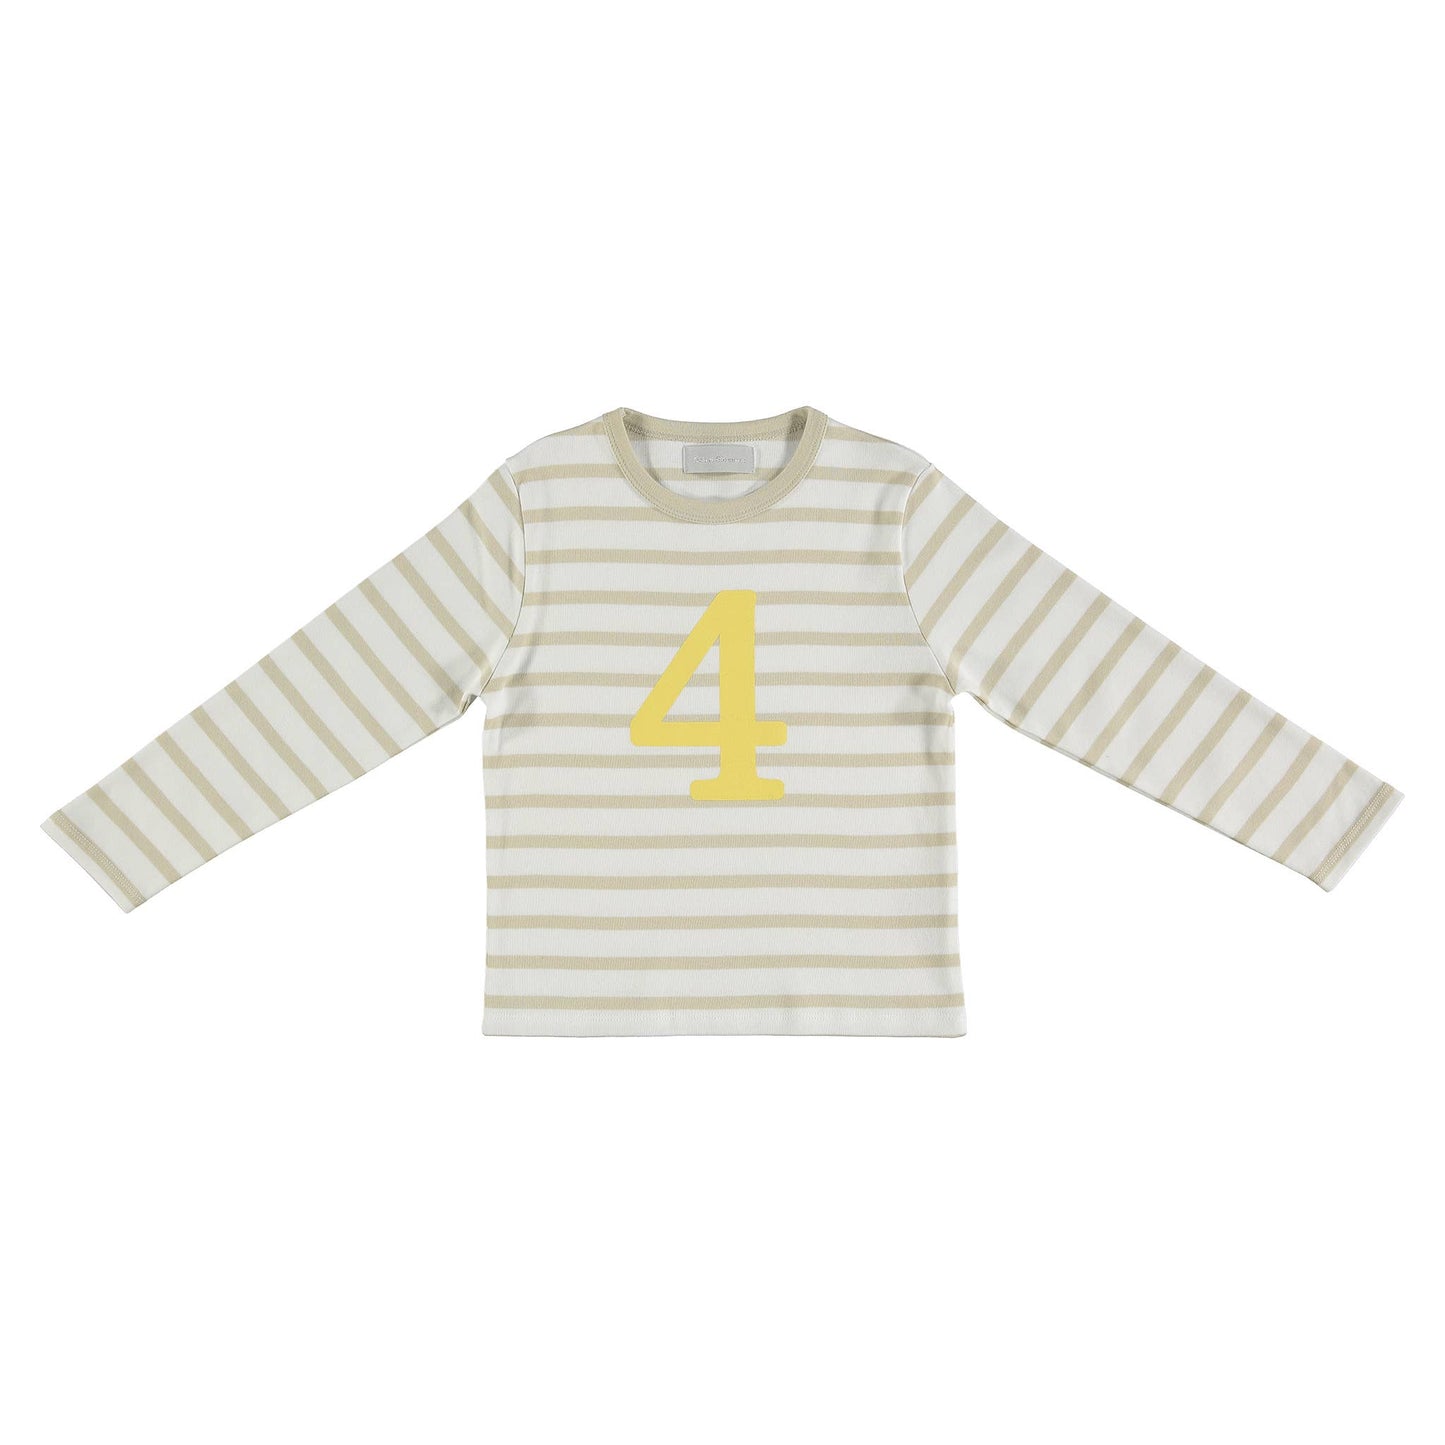 Sand & White Striped 4 (Yellow) Shirt